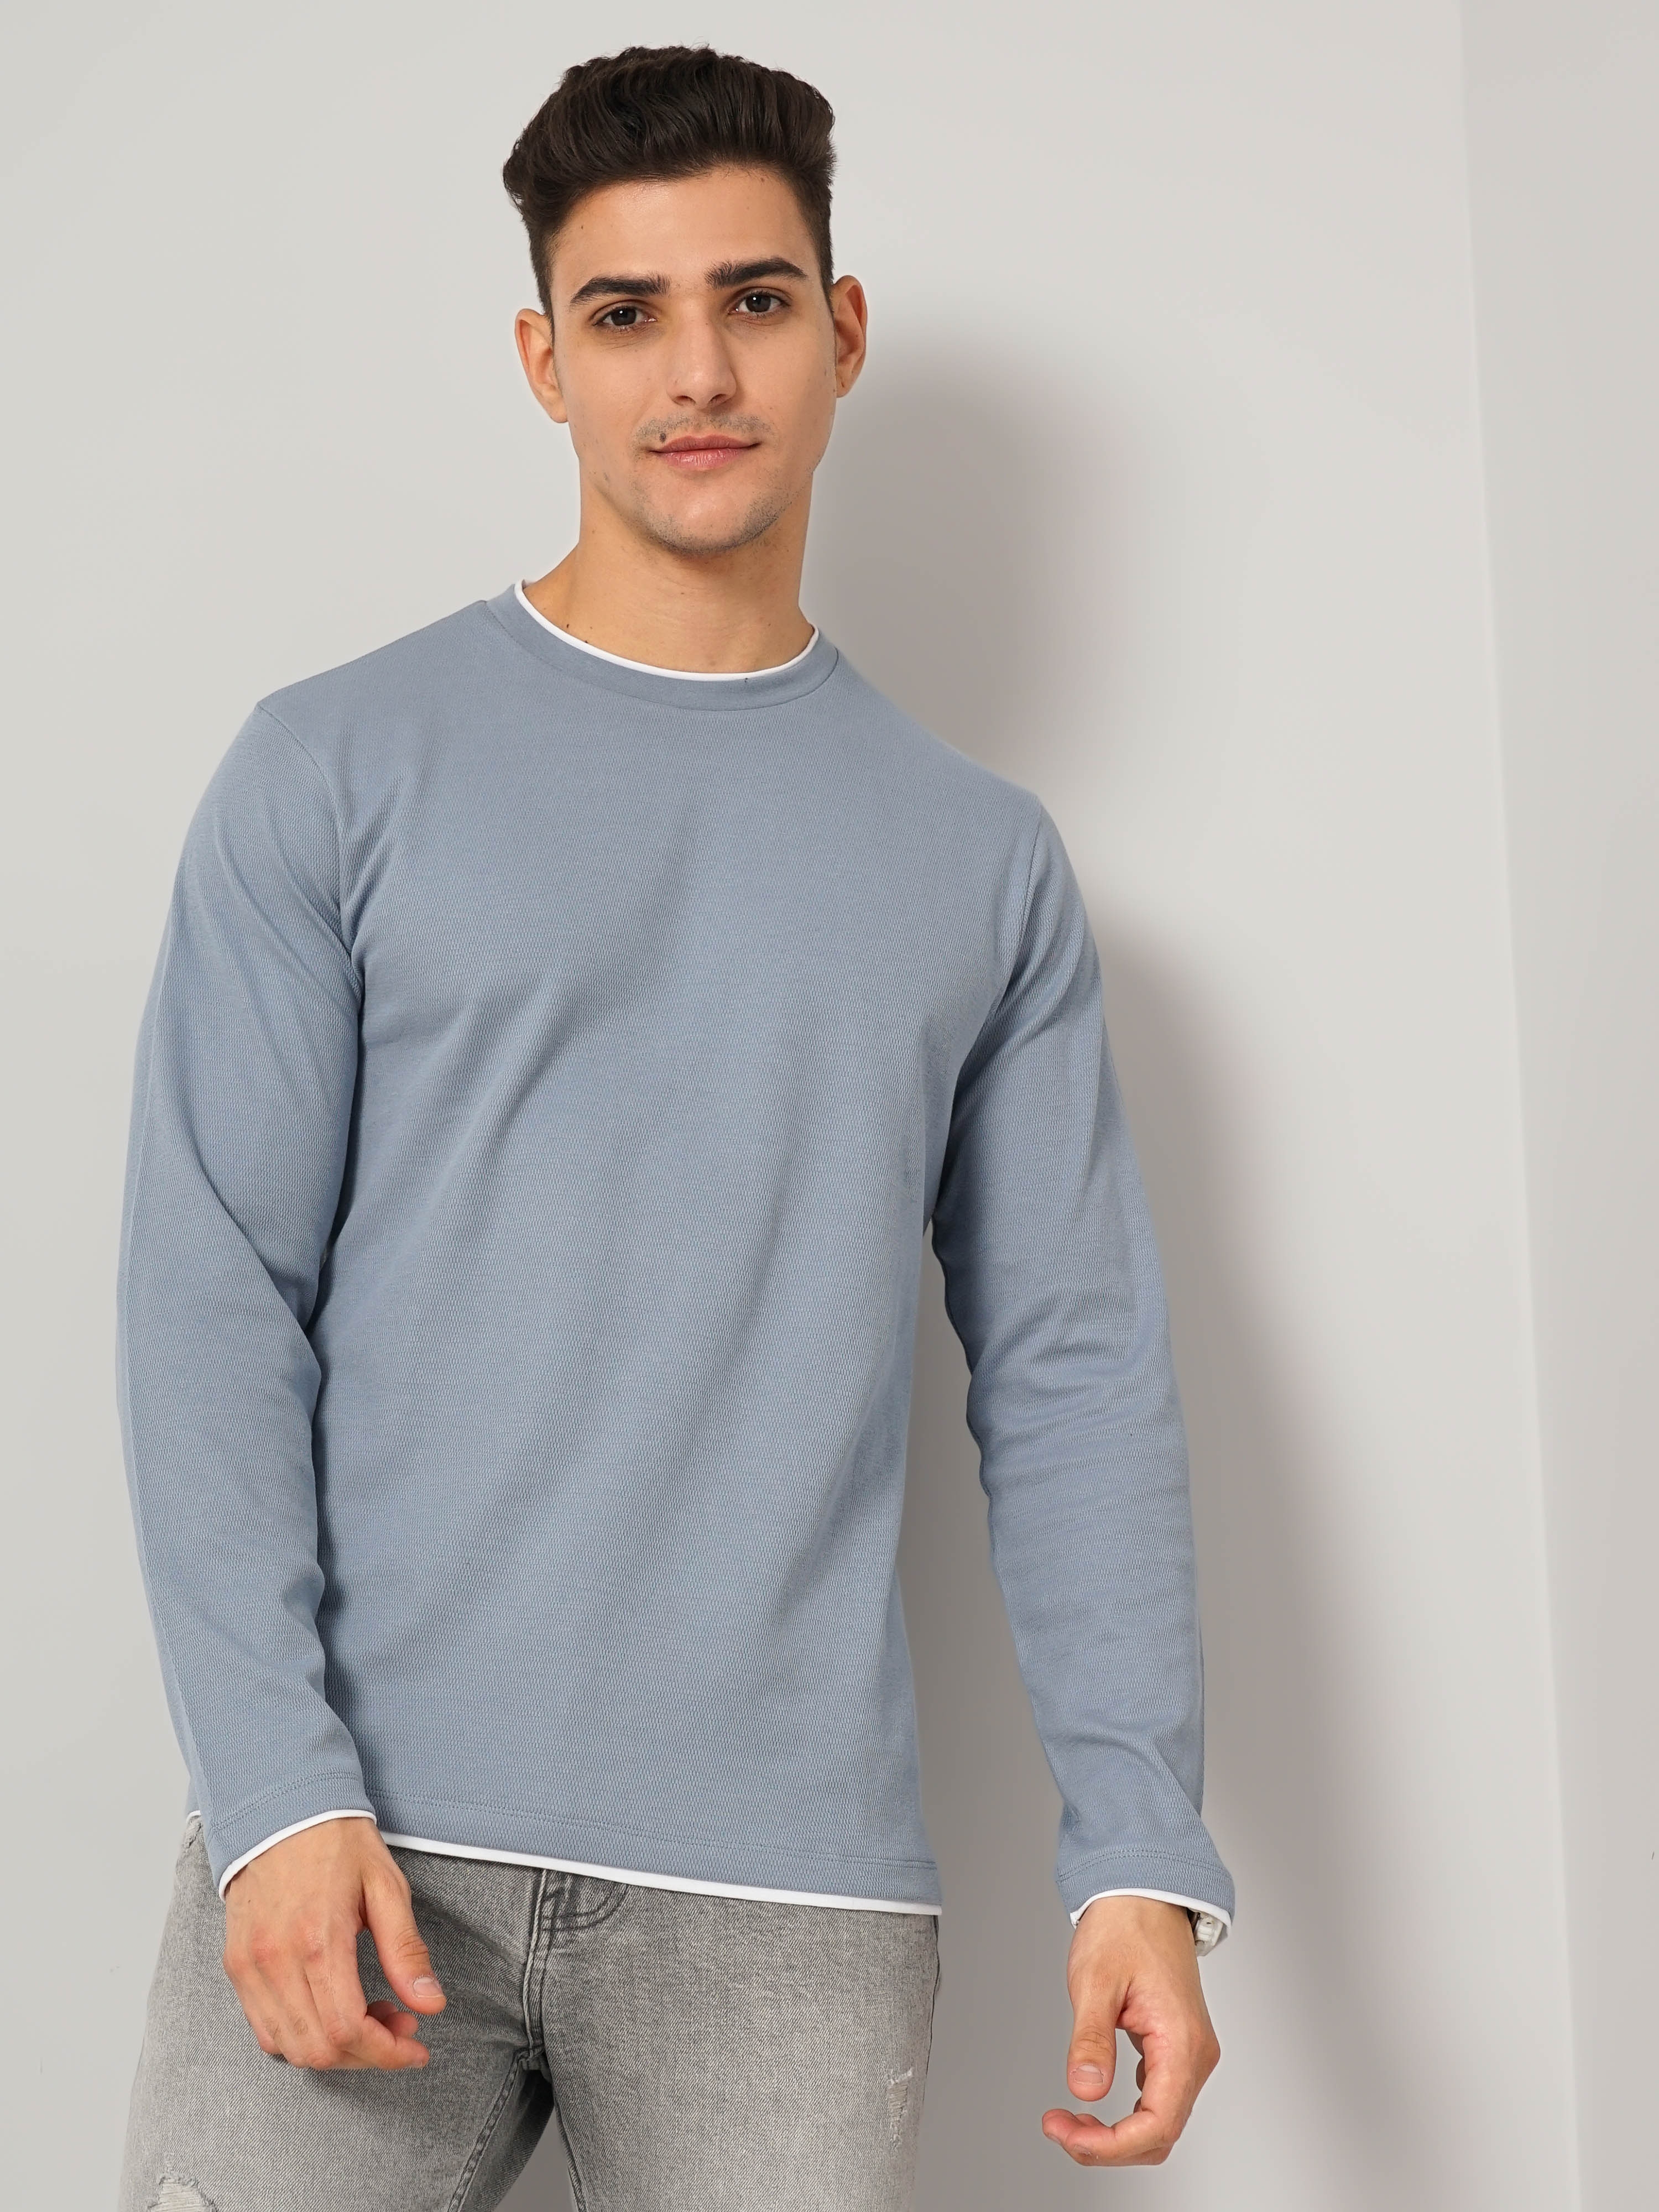 Men's Blue Knitted Sweatshirts